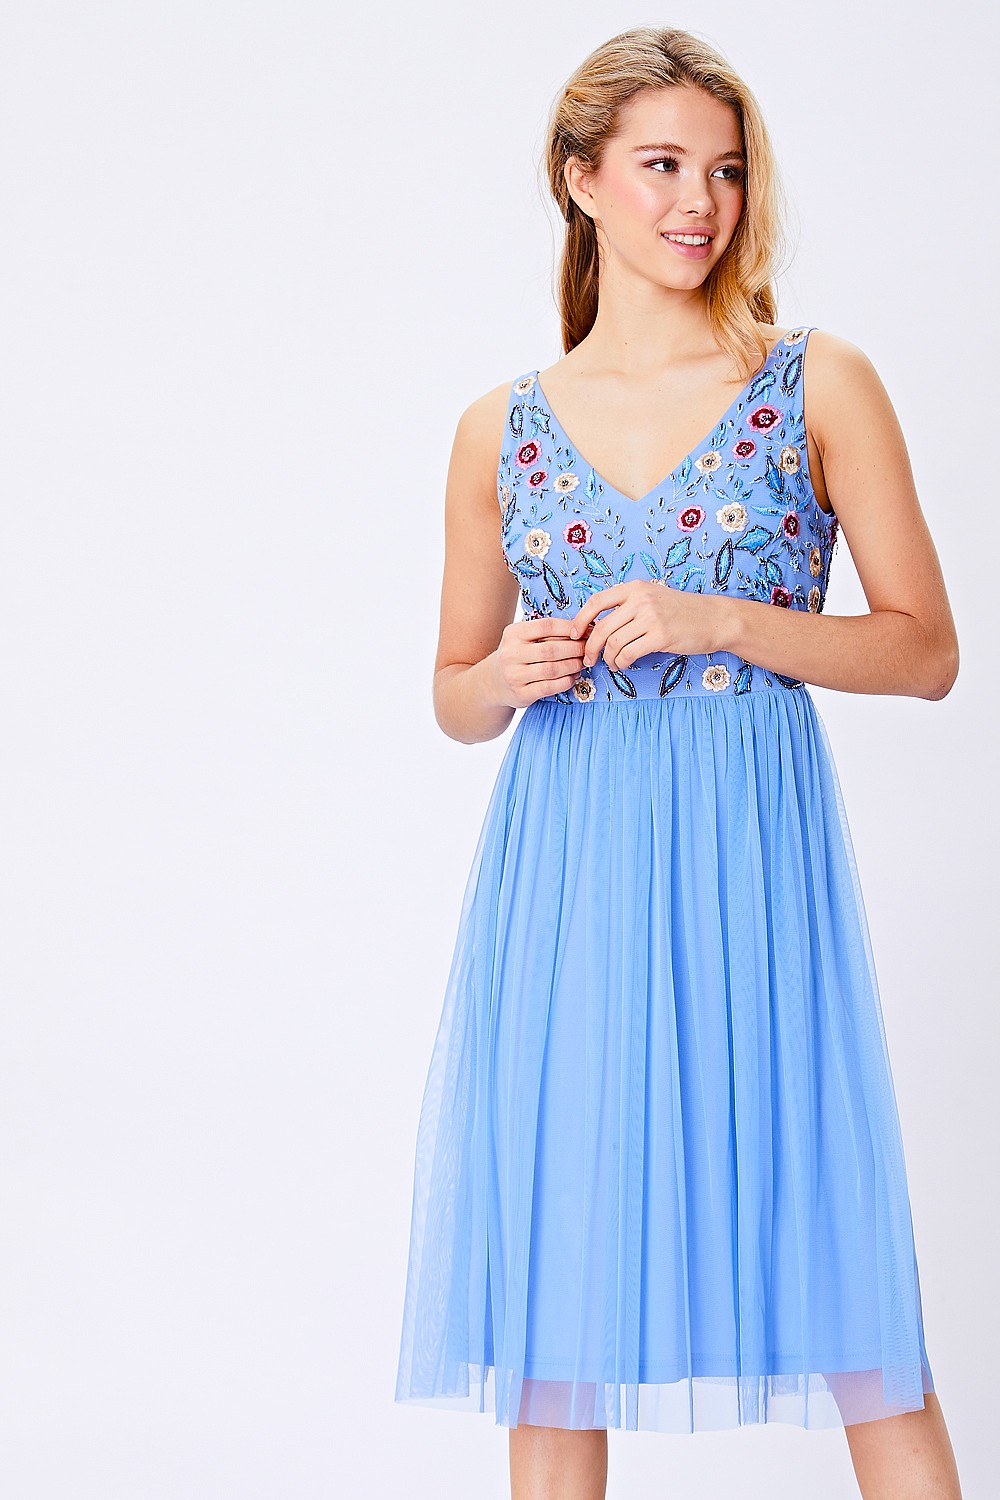 aqua blue midi dress